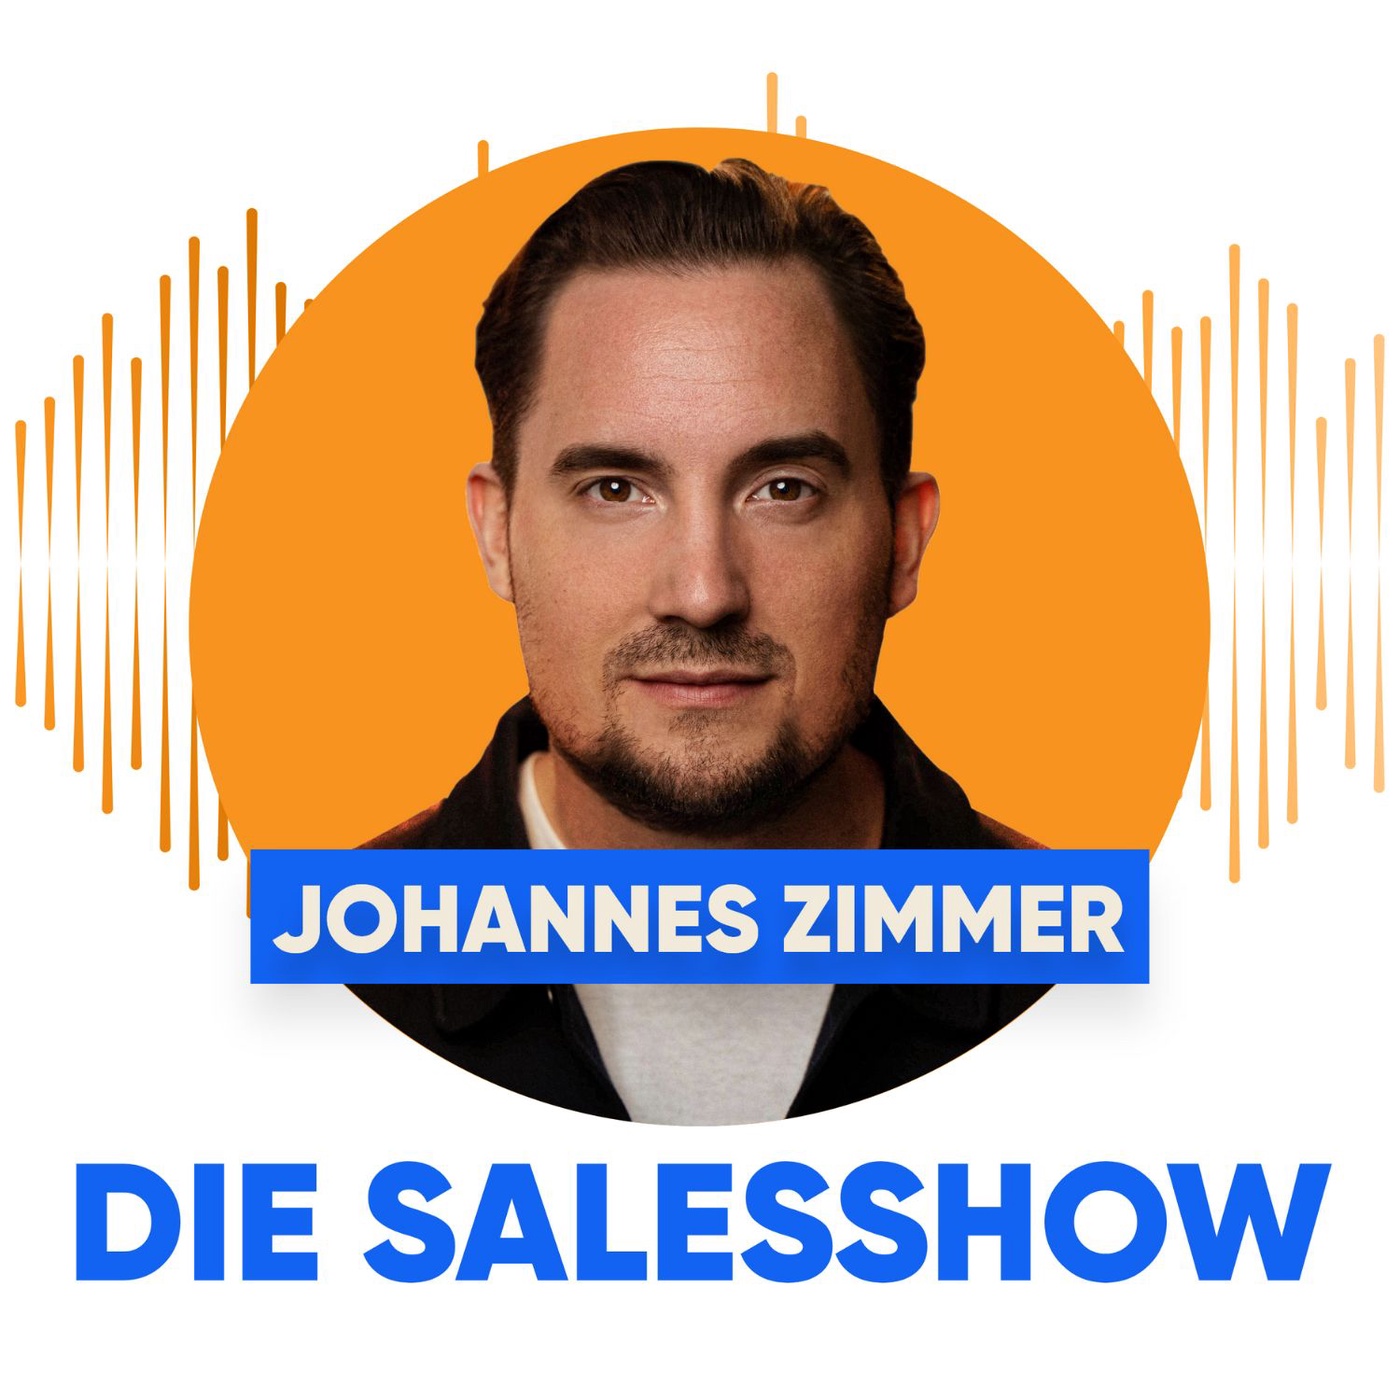 Die Sales Show by Johannes Zimmer